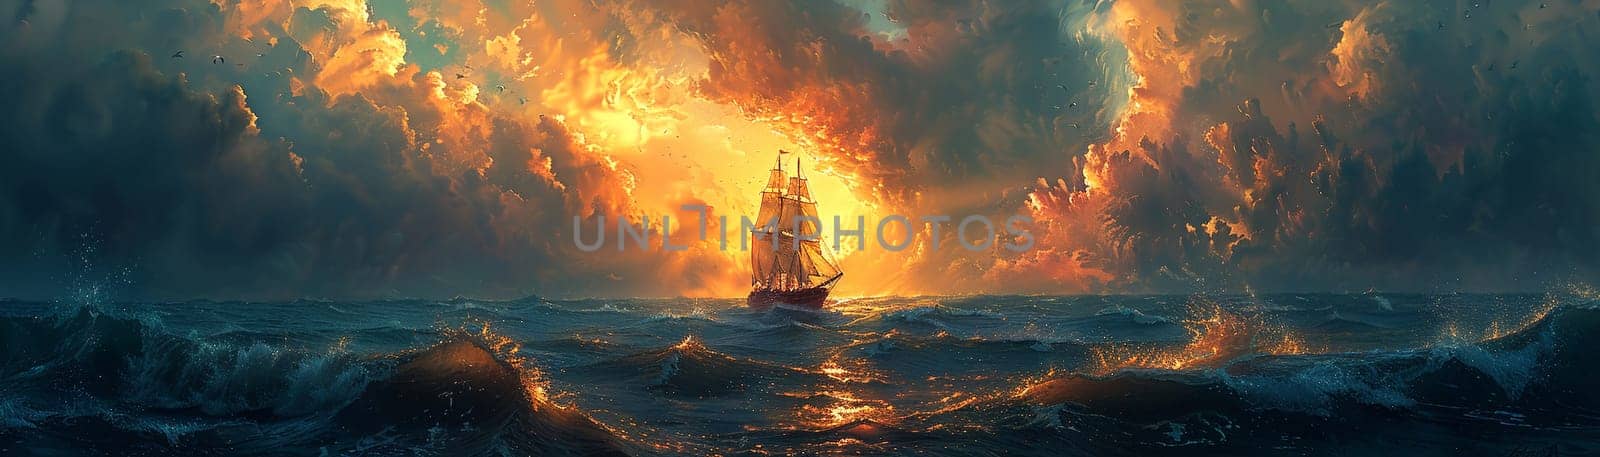 Seafarer adrift in an ocean of dreams by Benzoix